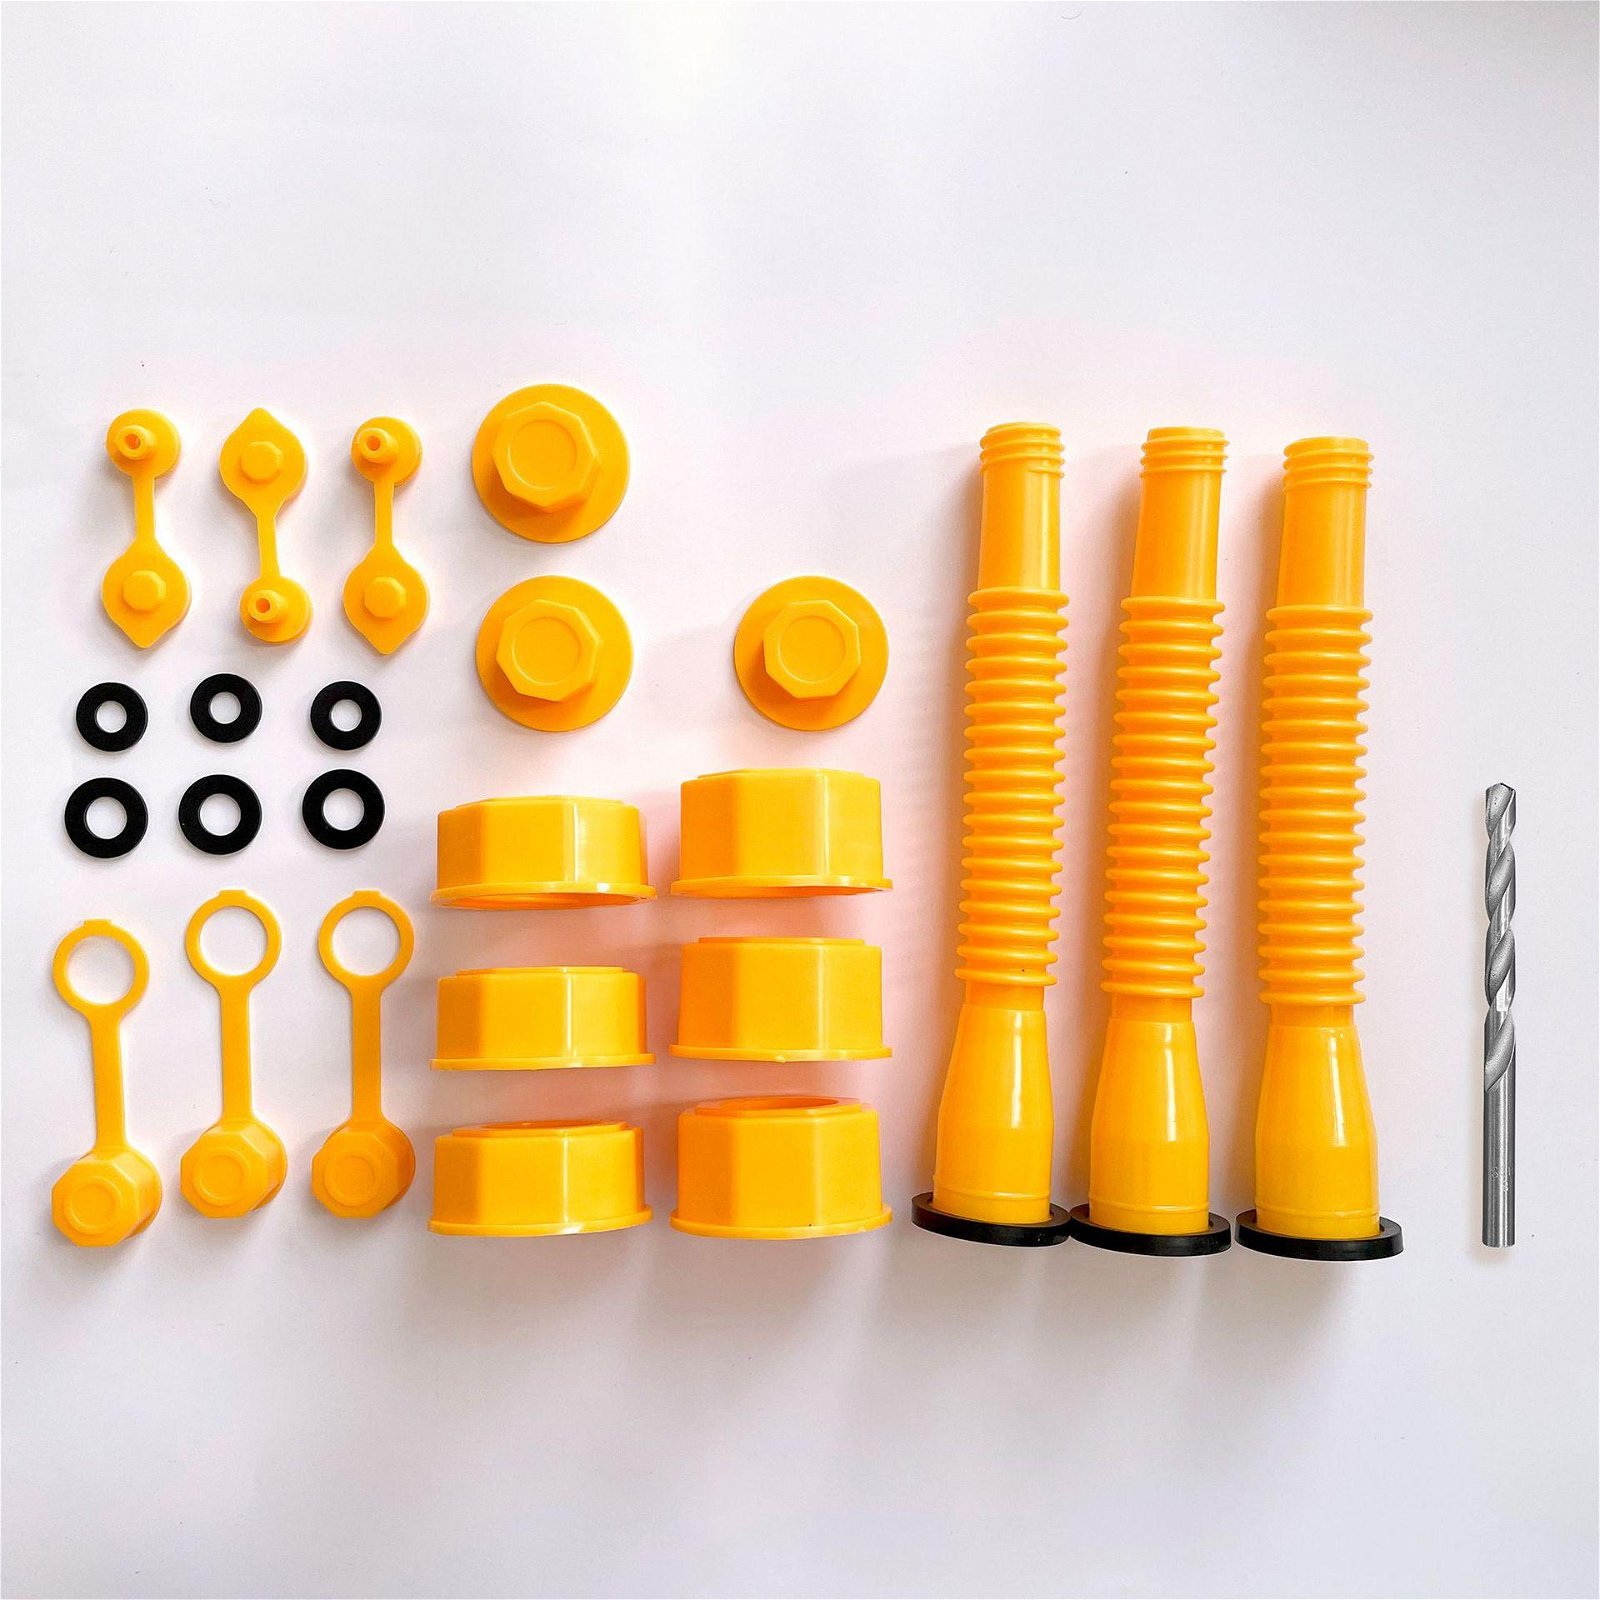 Gas Can Replacement Spout Kit Flexible Pour Nozzle with Gasket Stopper Caps Collar Caps Stripe Cap Spout Kit for Water Jugs